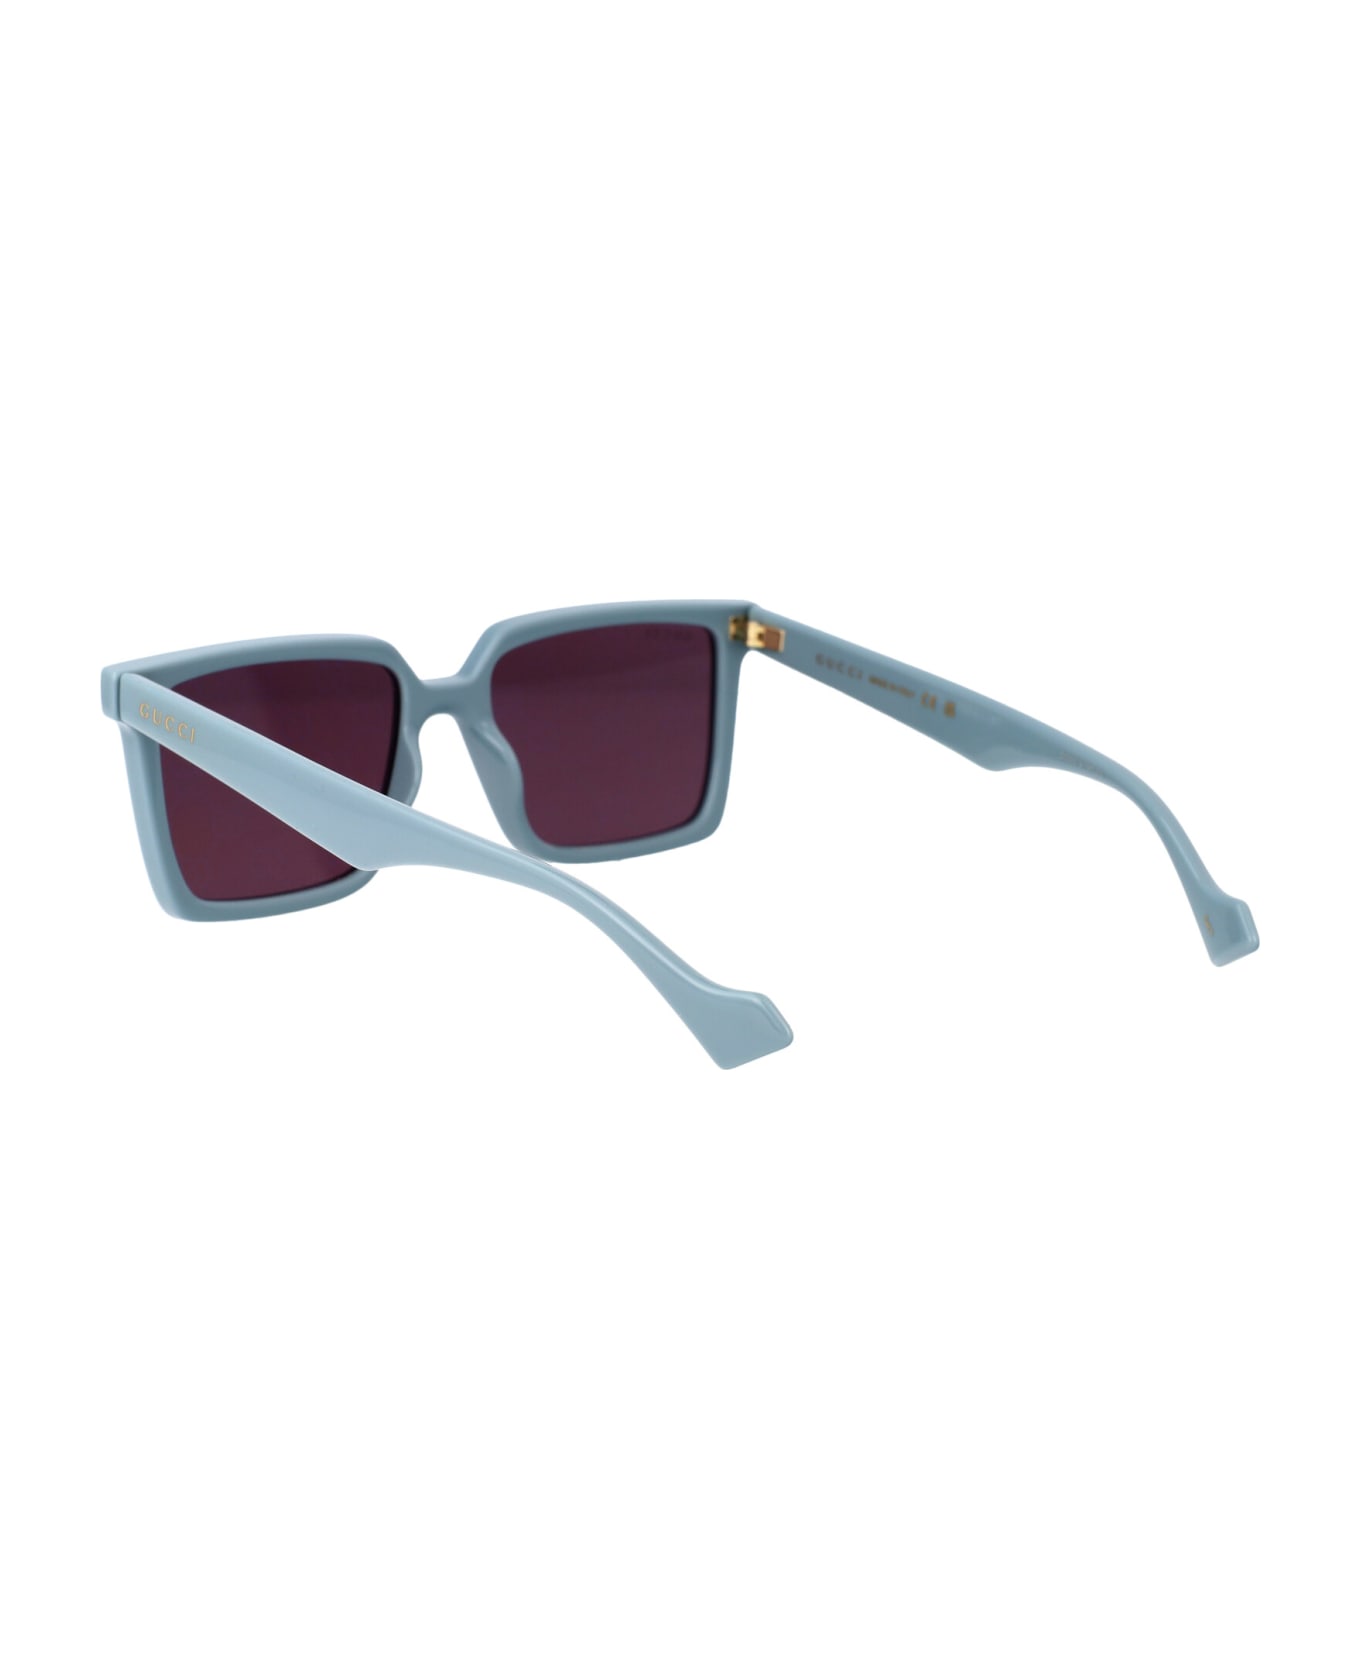 Gucci Eyewear Gg1540s Sunglasses - 003 LIGHT BLUE LIGHT BLUE VIOLET